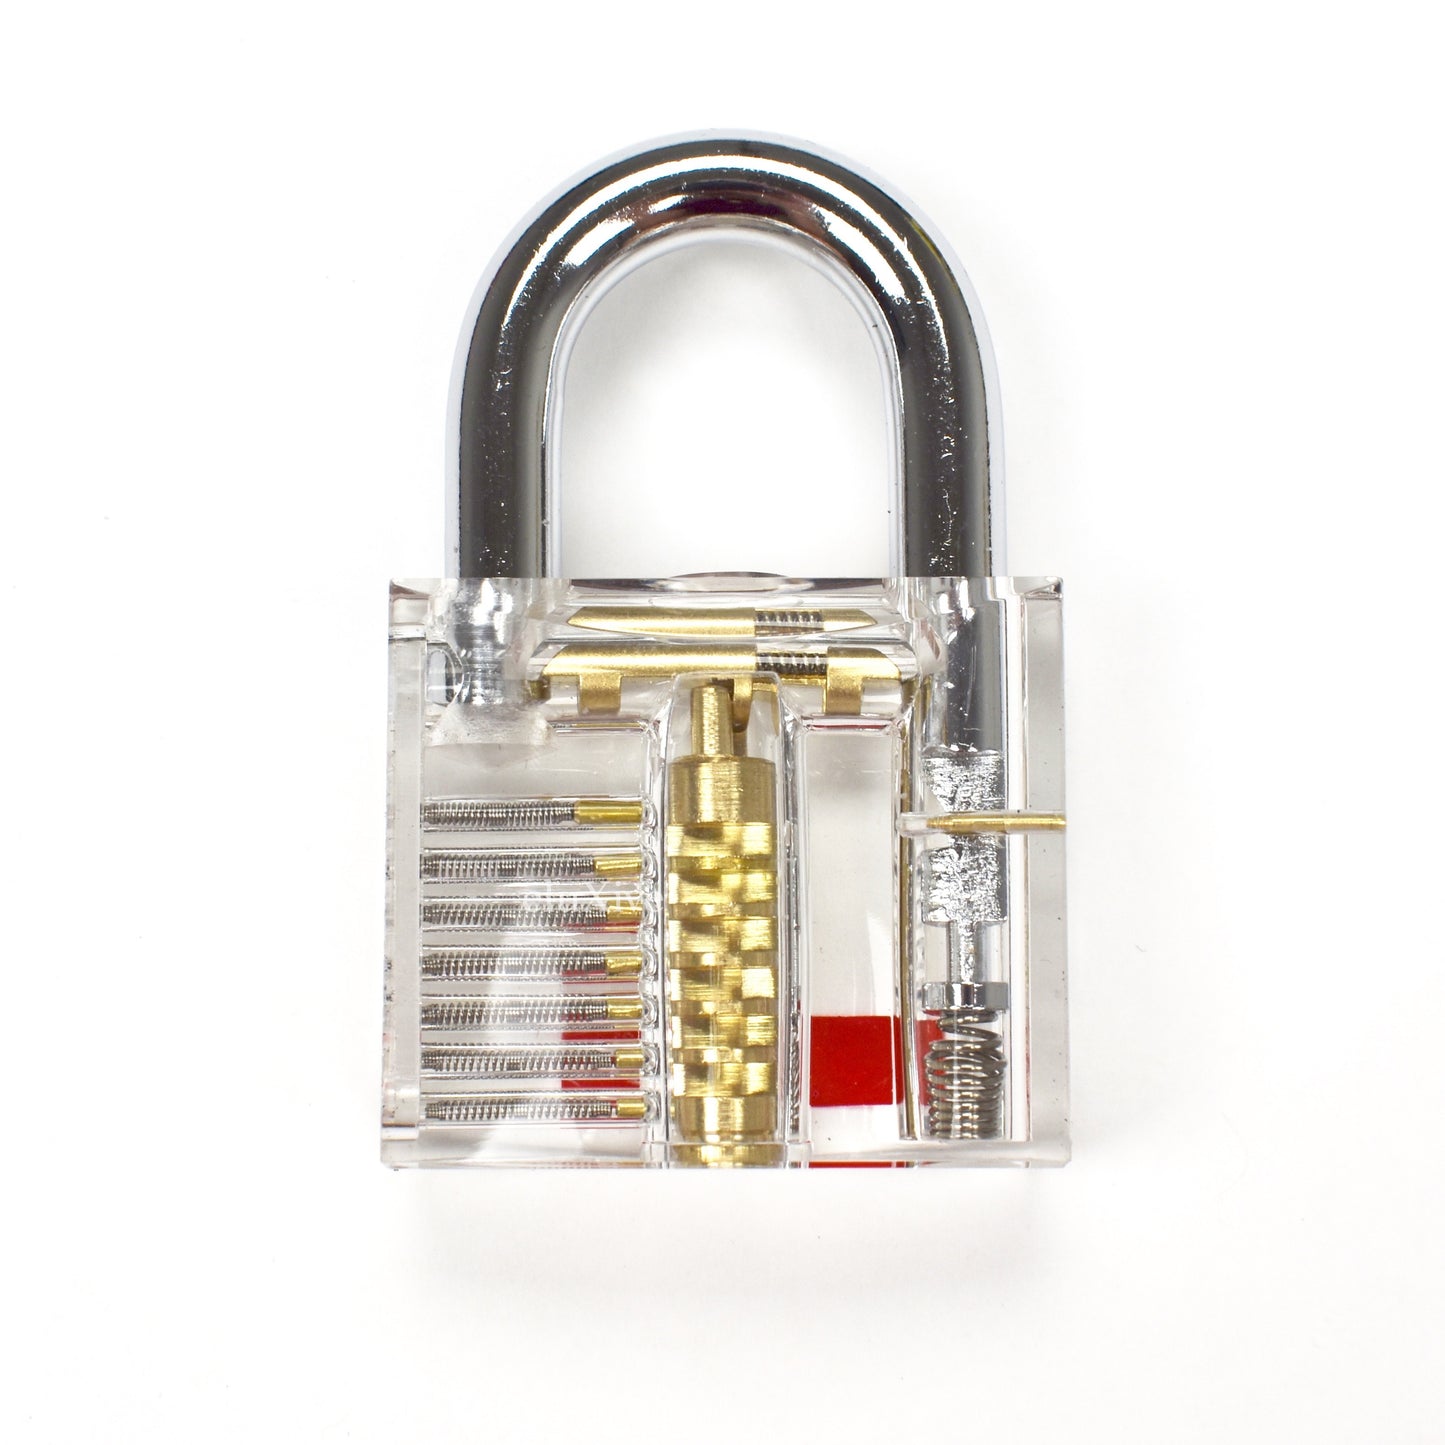 Supreme - Transparent Box Logo Lock